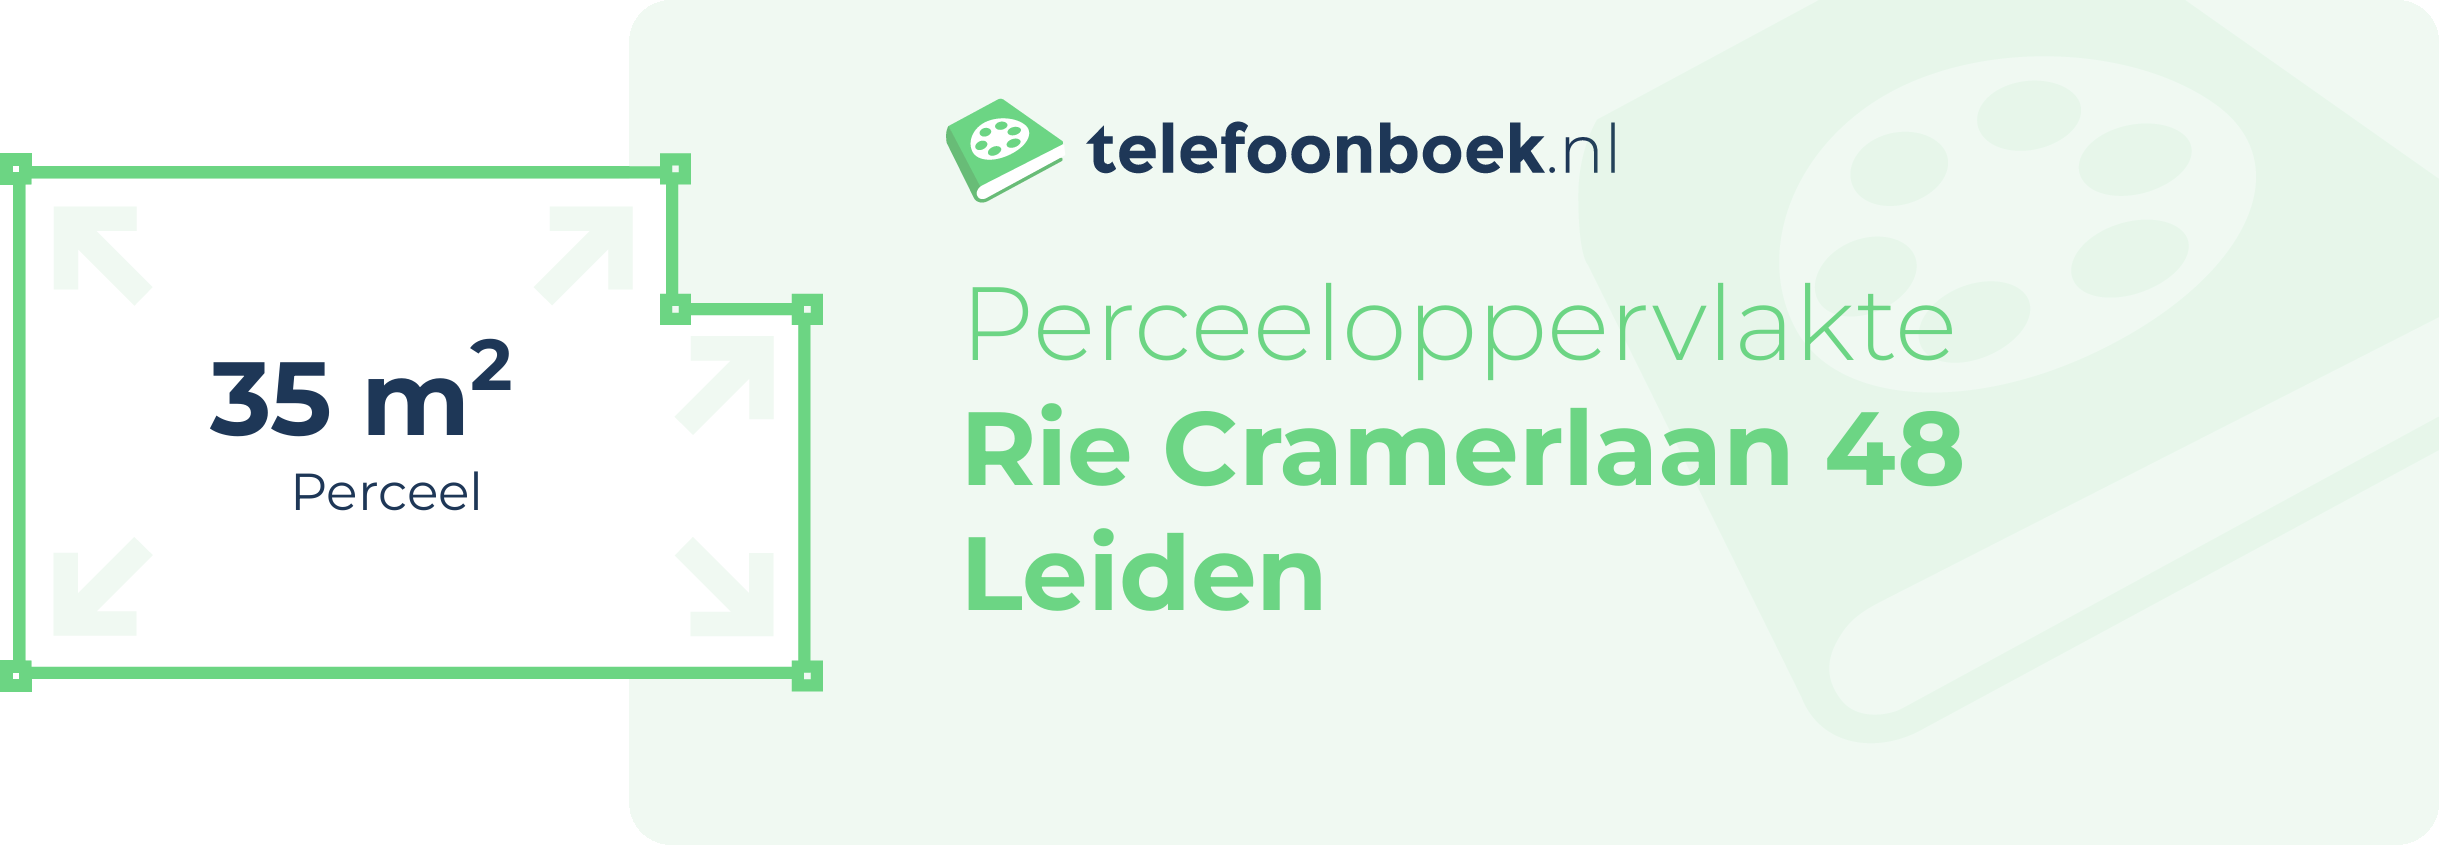 Perceeloppervlakte Rie Cramerlaan 48 Leiden